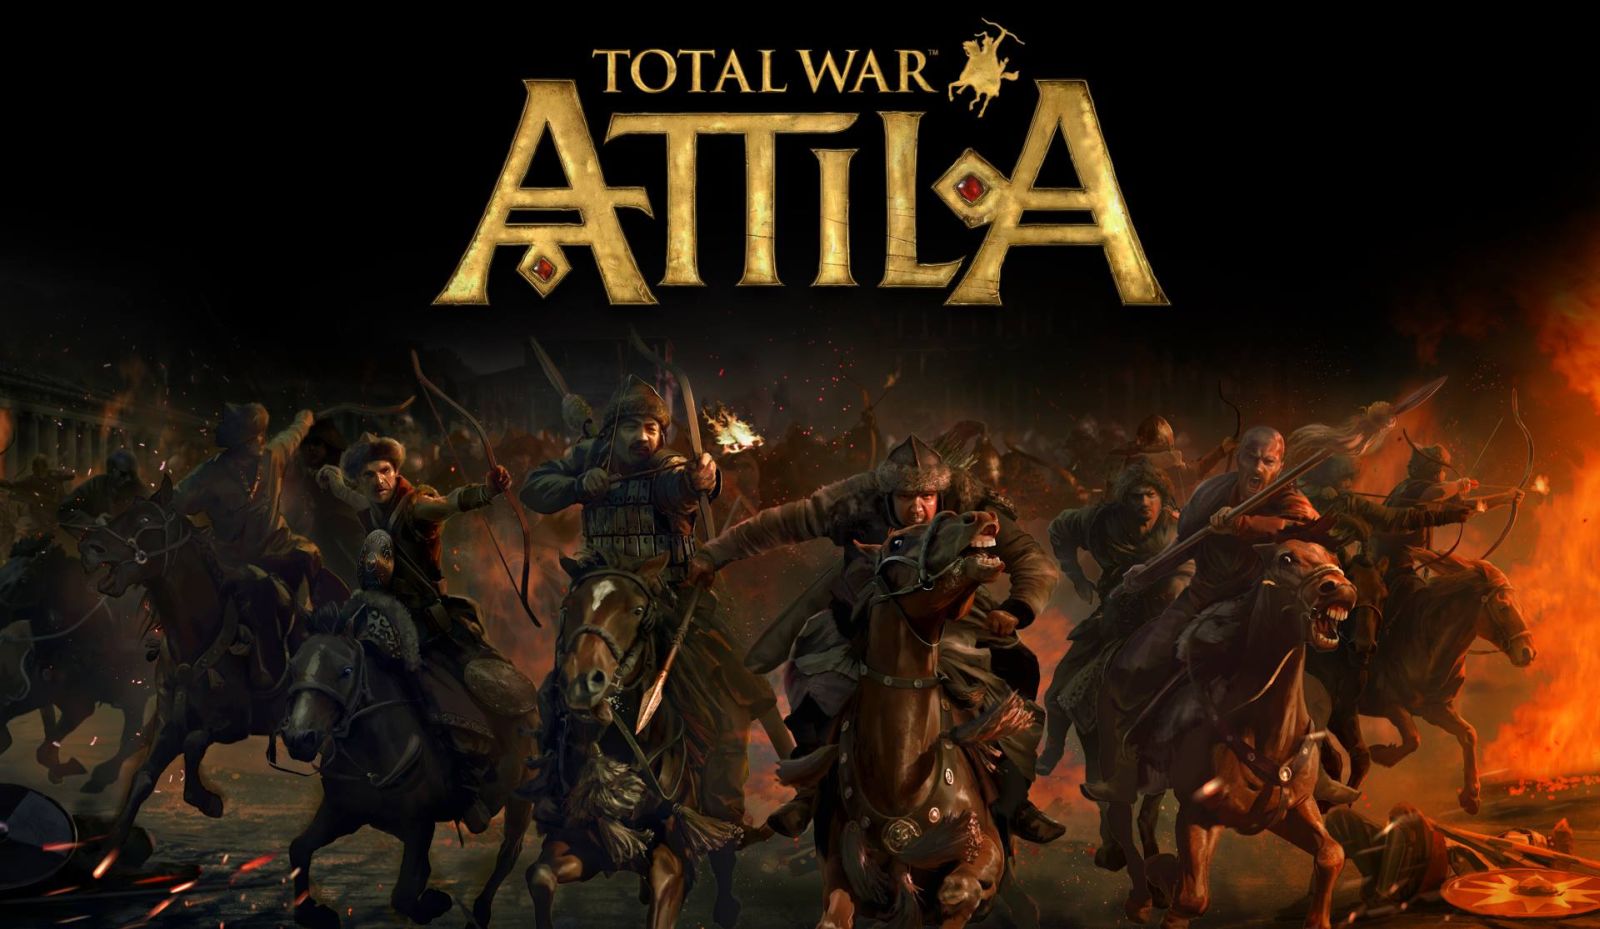 High Resolution Wallpaper | Total War: Attila 1600x929 px